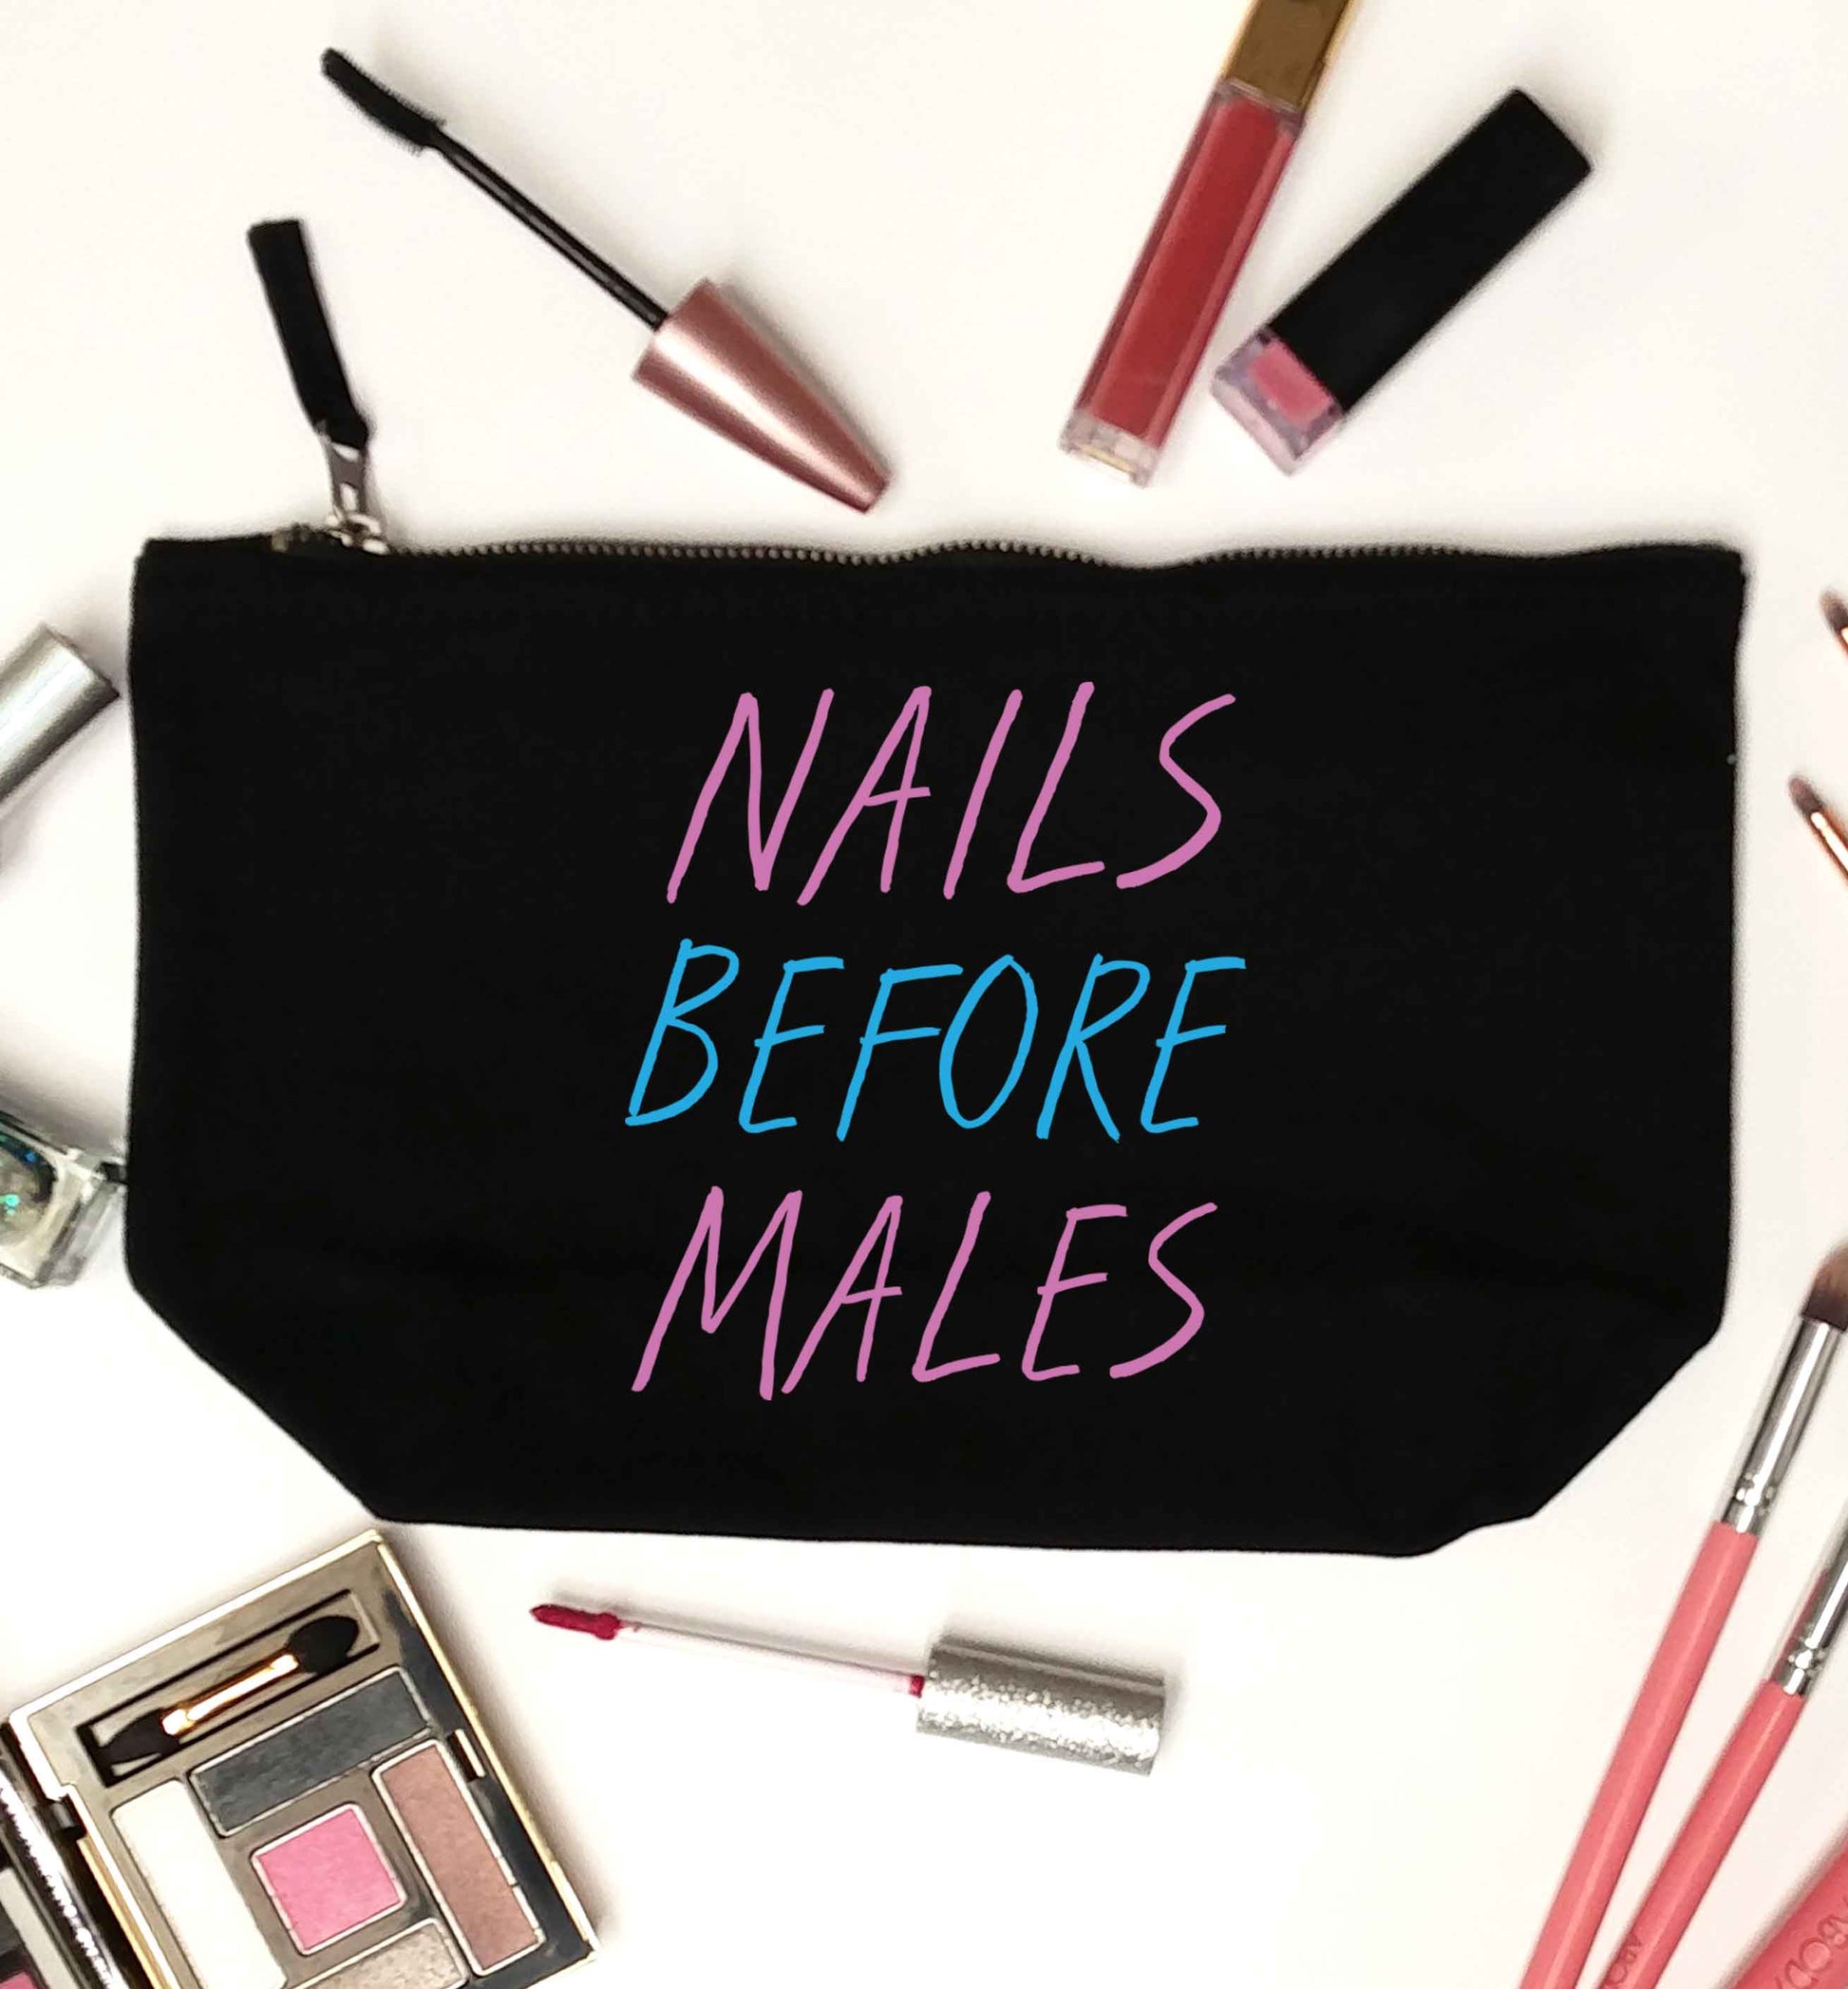 Nails before males black makeup bag